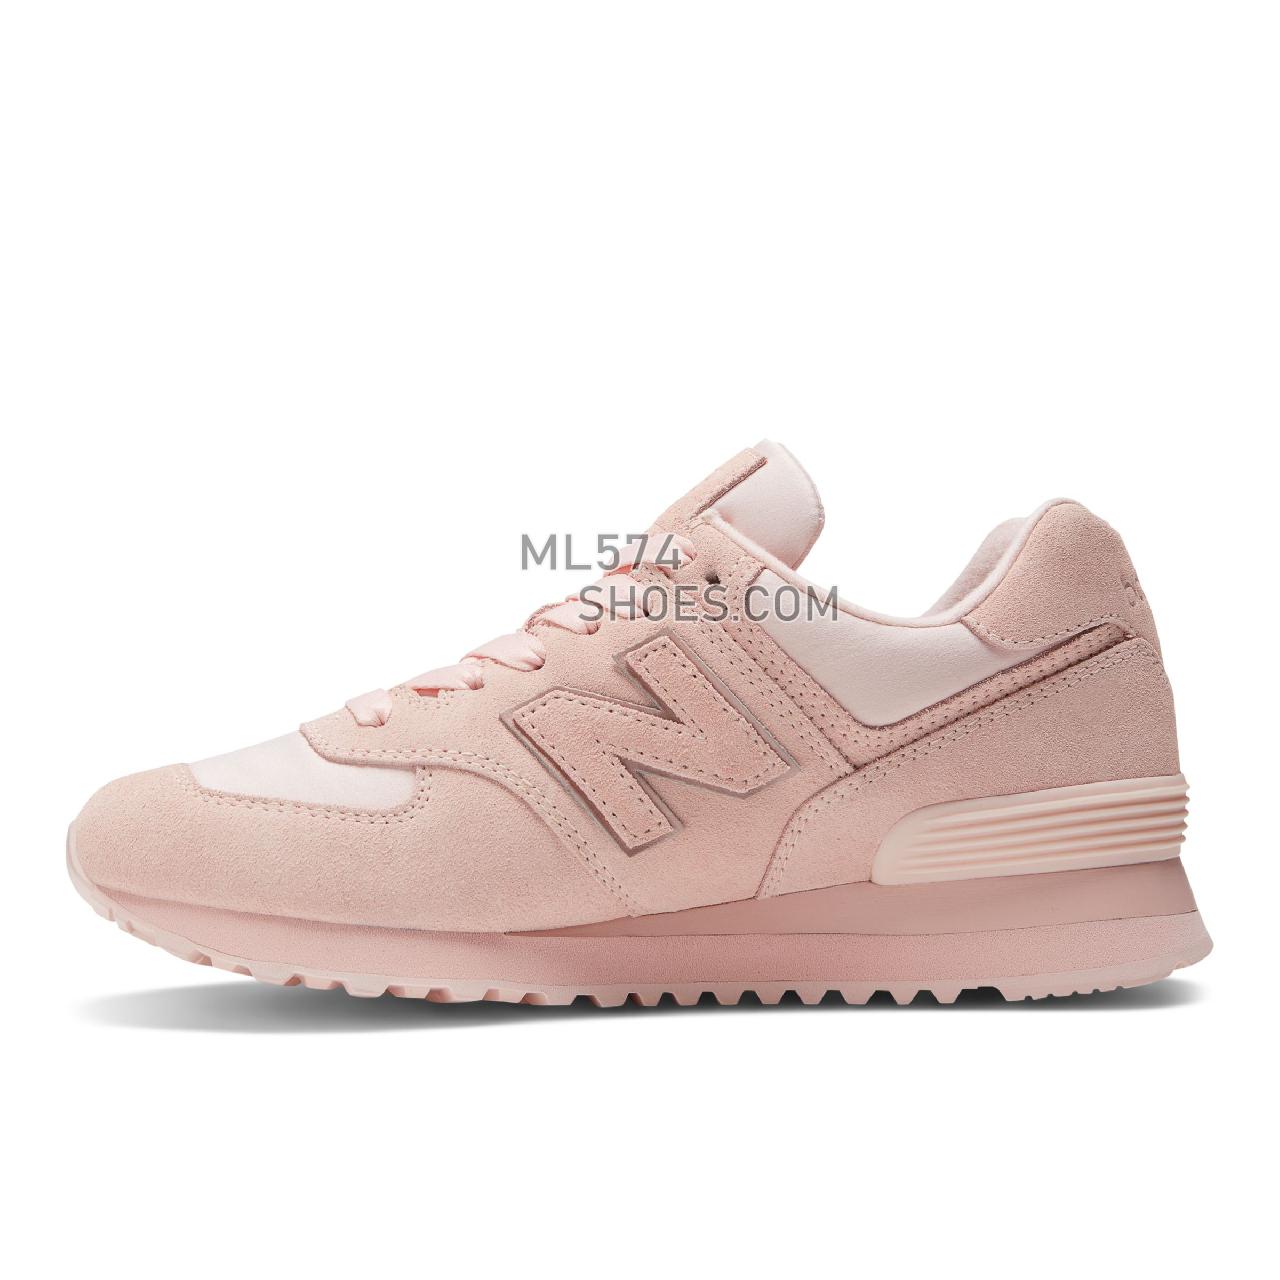 New Balance 574v2 - Women's Classic Sneakers - Pink Haze - WL574SLA